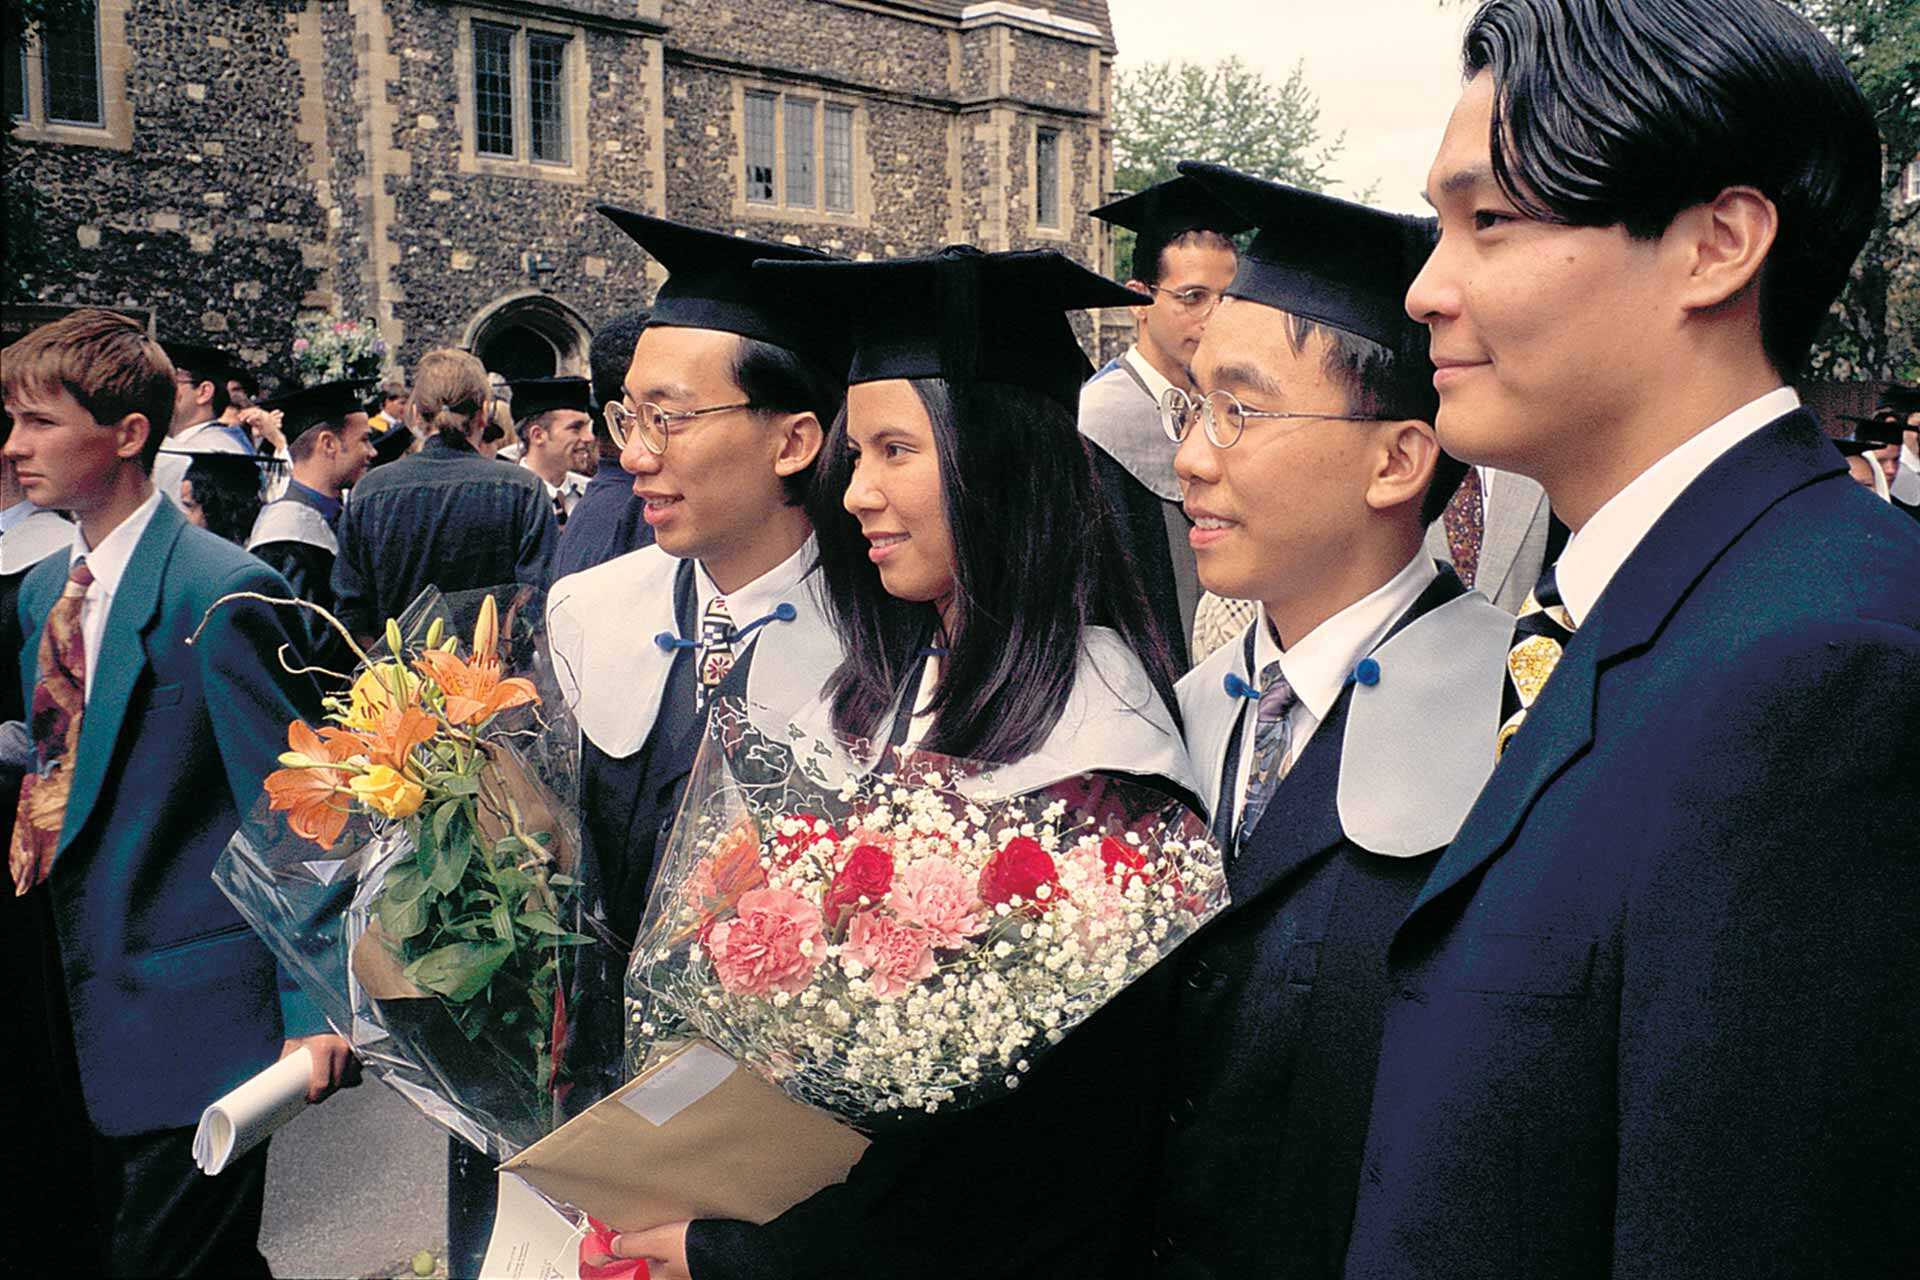 Kent graduates and guests in 1997 graduation ceremony